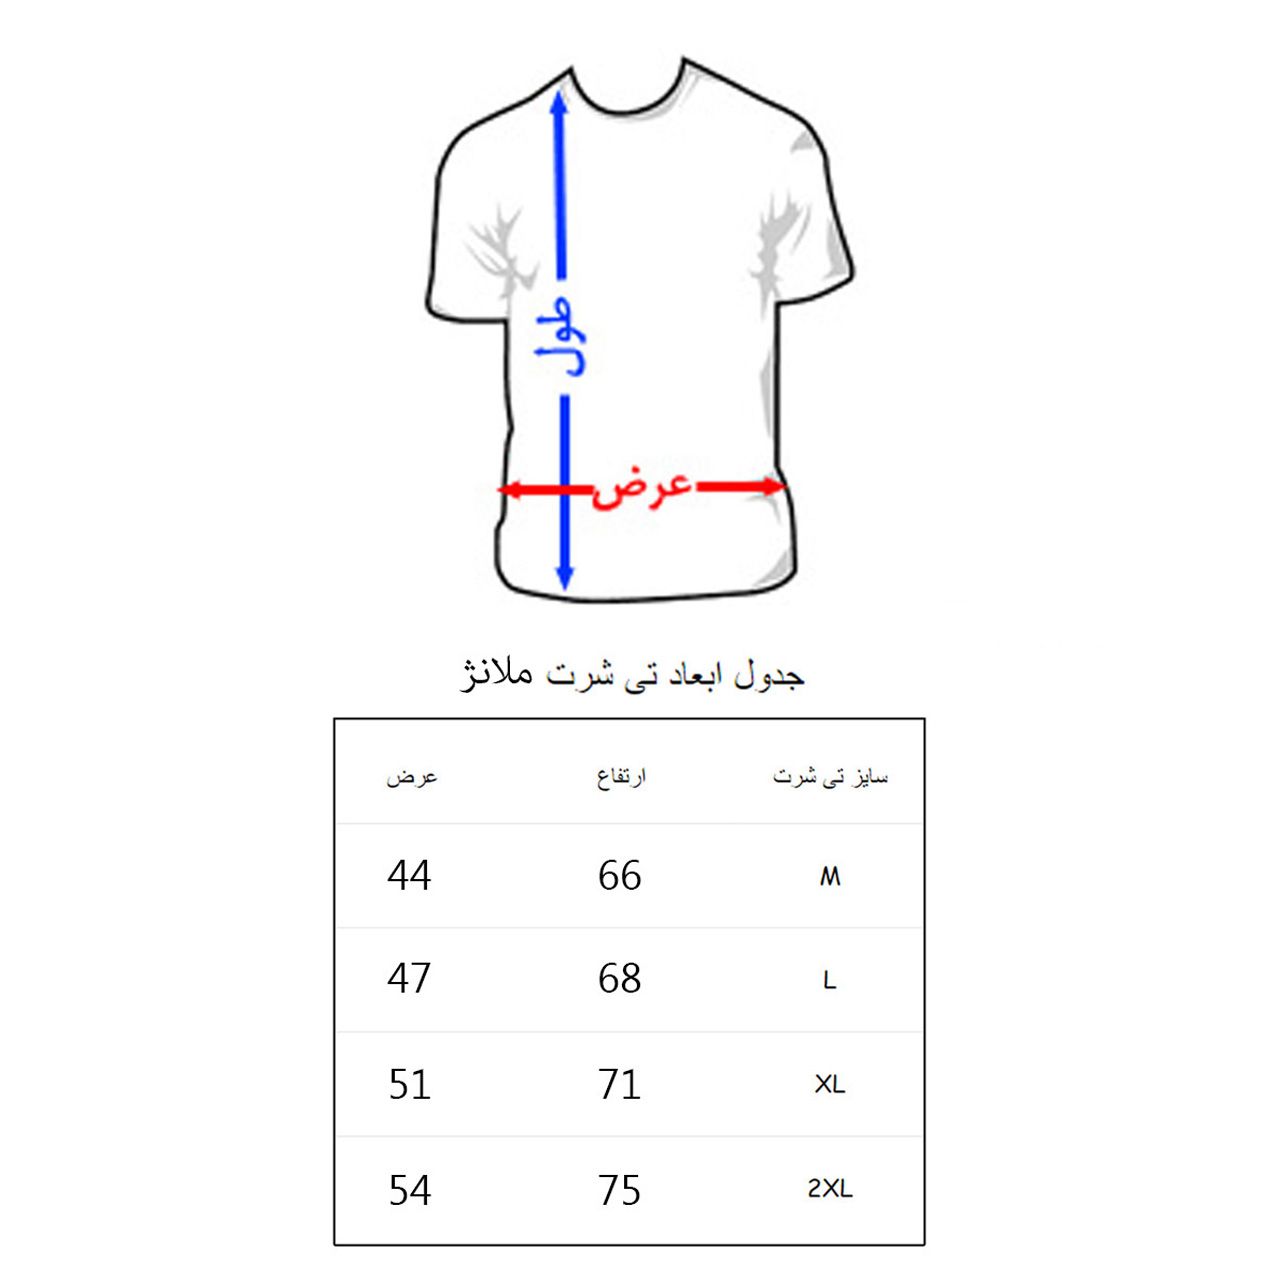 تی شرت زنانه به رسم طرح فولکس واگن کد 4471 -  - 2